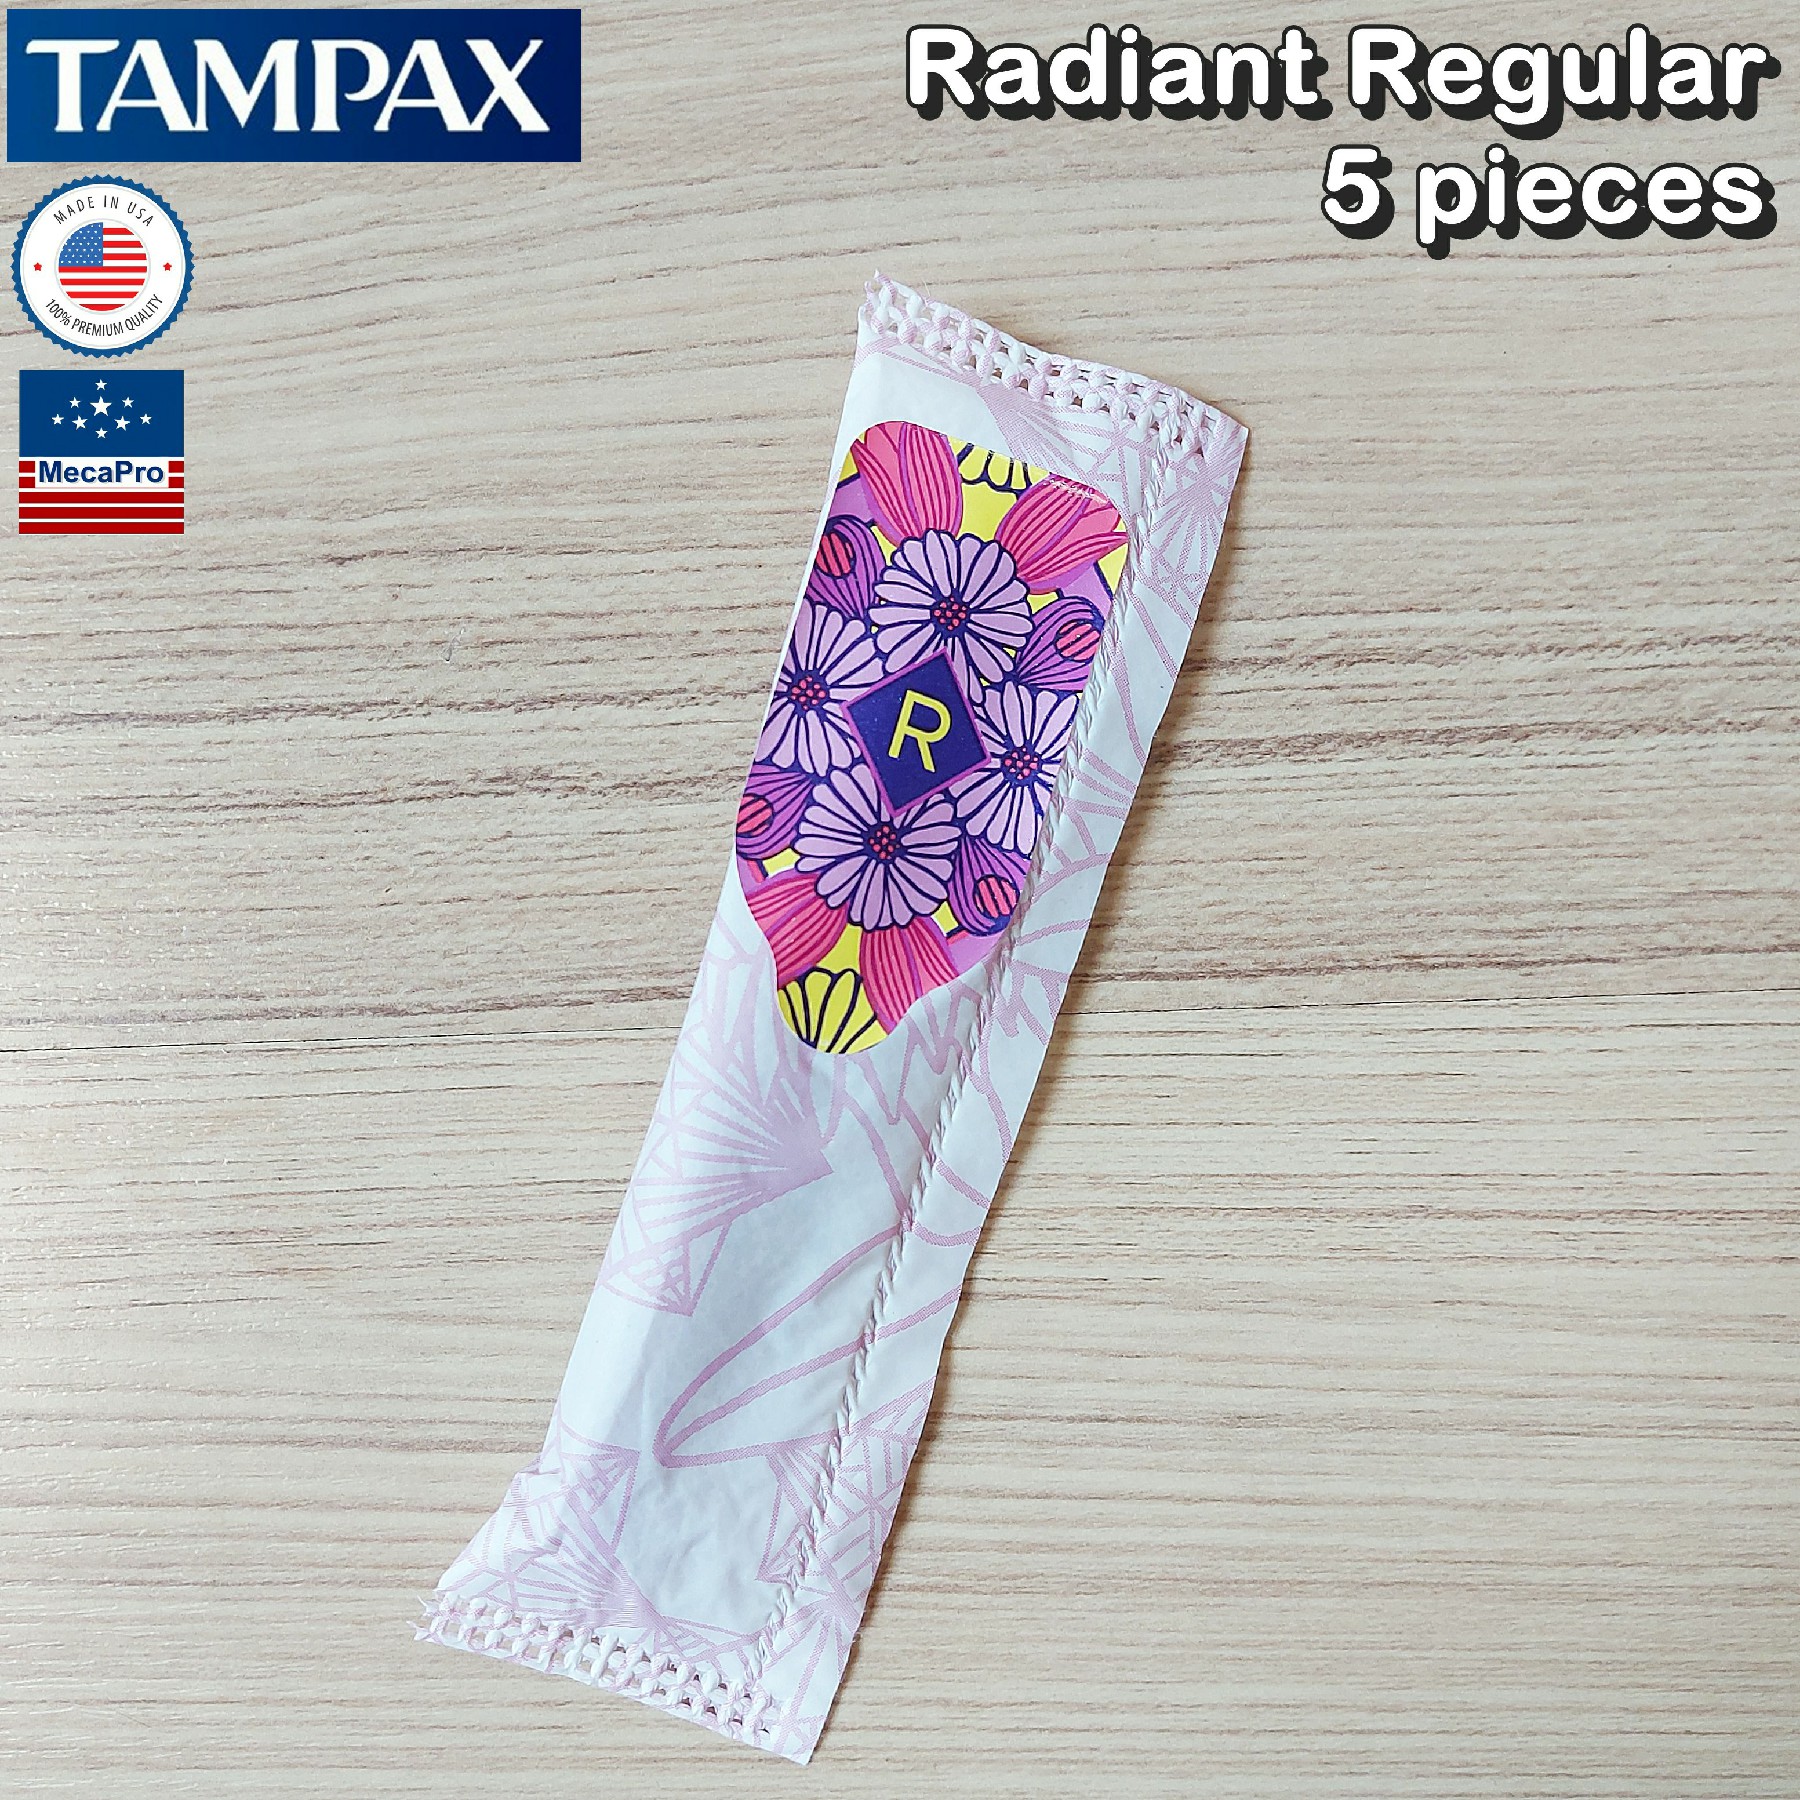 Tampax® Radiant Regular Absorbency Tampons Unscented 5 pieces ผ้าอนามัยแบบสอด 5 ชิ้น เหมาะกับวันมาปกติ ไร้กลิ่น